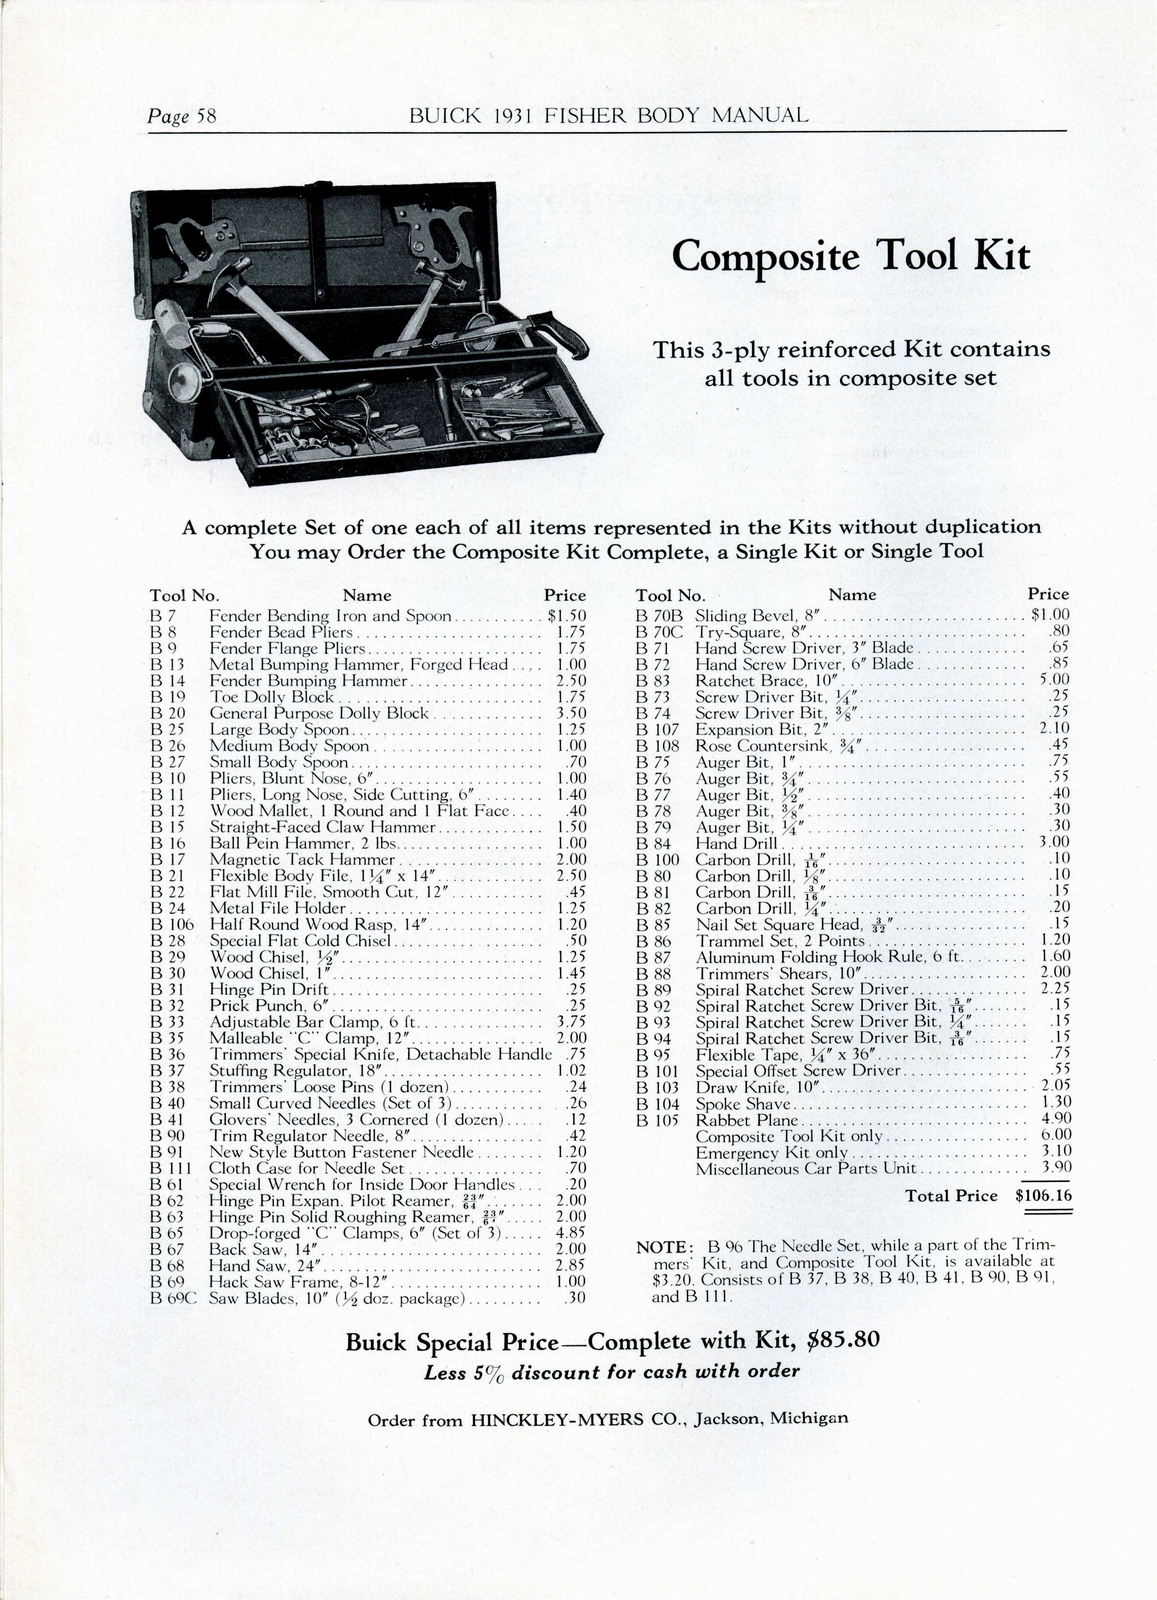 n_1931 Buick Fisher Body Manual-58.jpg